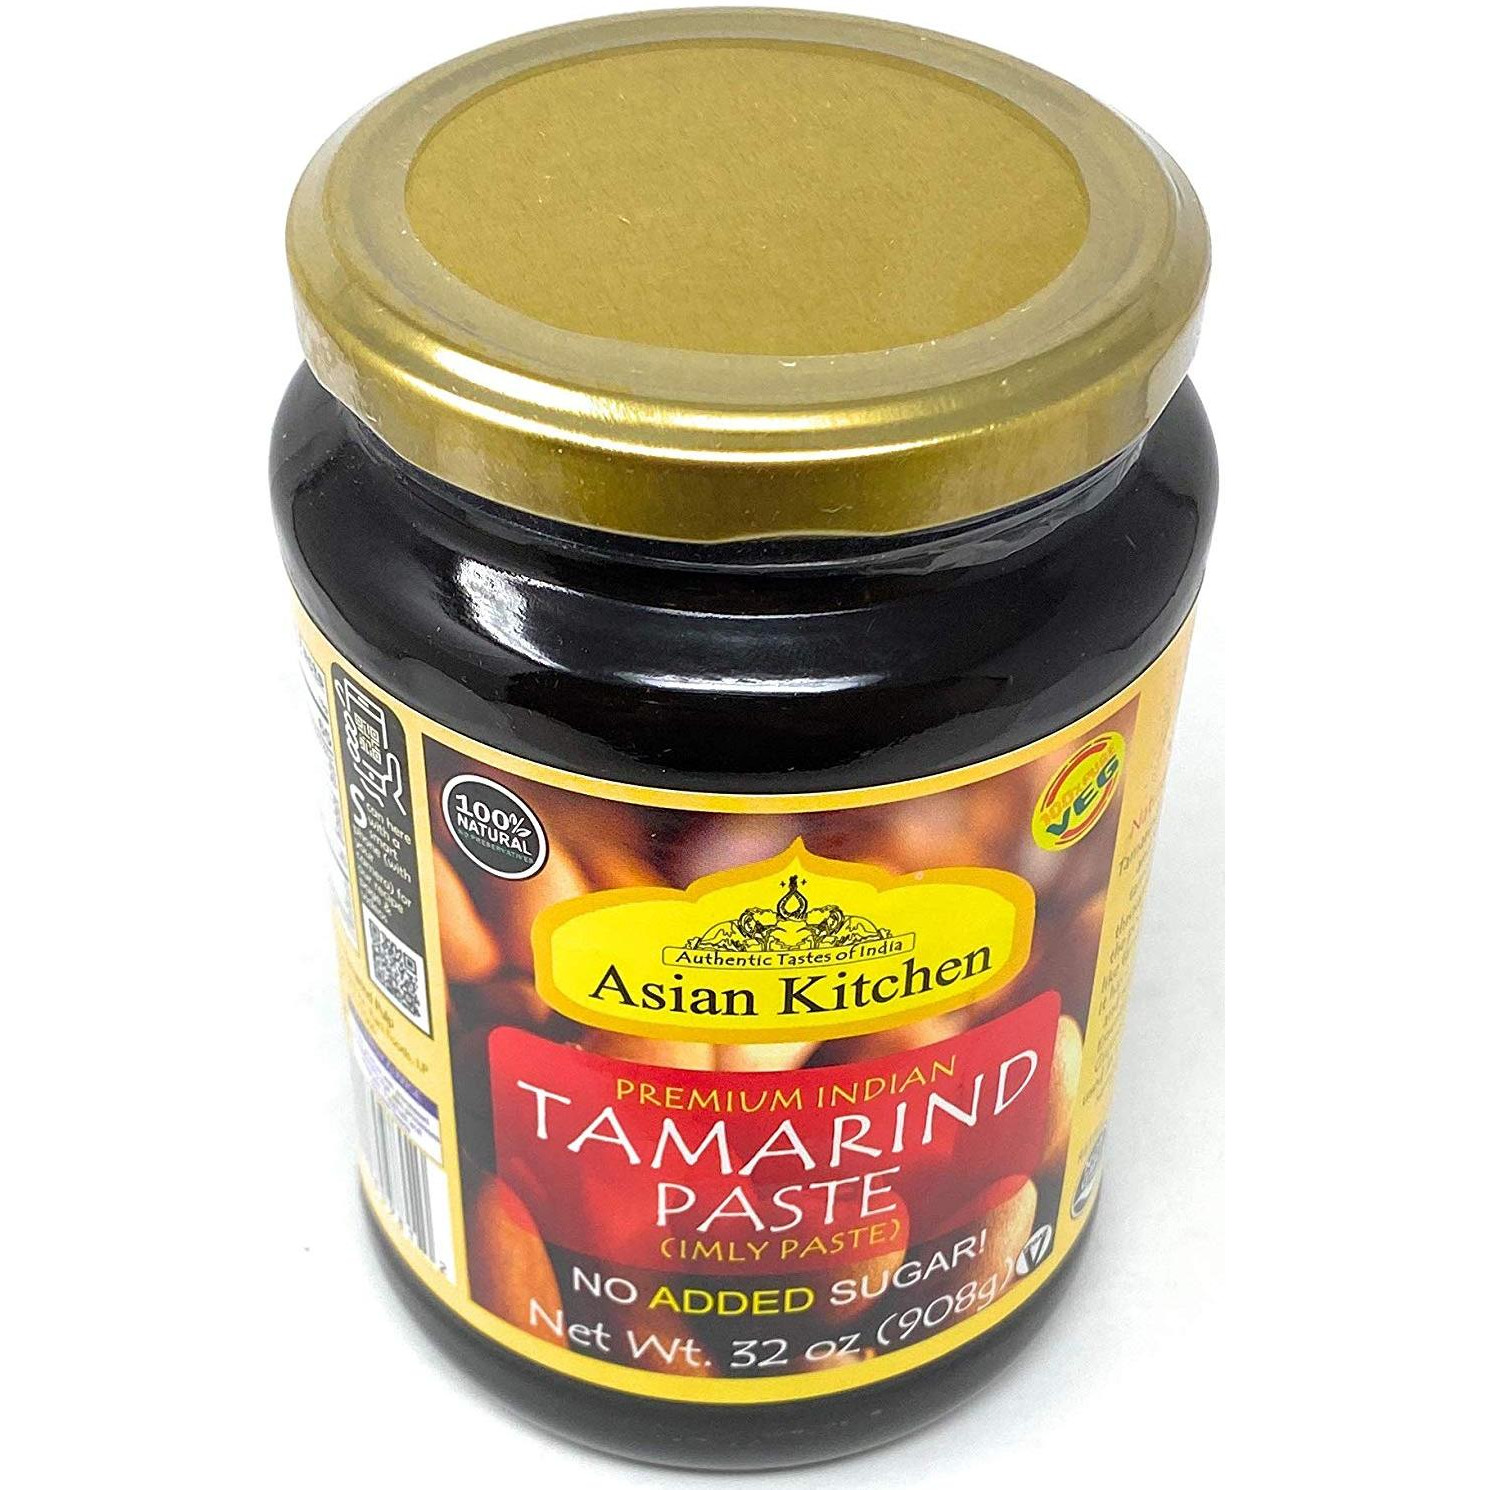 Asian Kitchen Tamarind Paste Puree (Imli) 8oz (227g) Glass Jar, Gluten Free, No Added Sugar ~ All Natural | Vegan | Non-GMO | No Colors | Indian Origin???